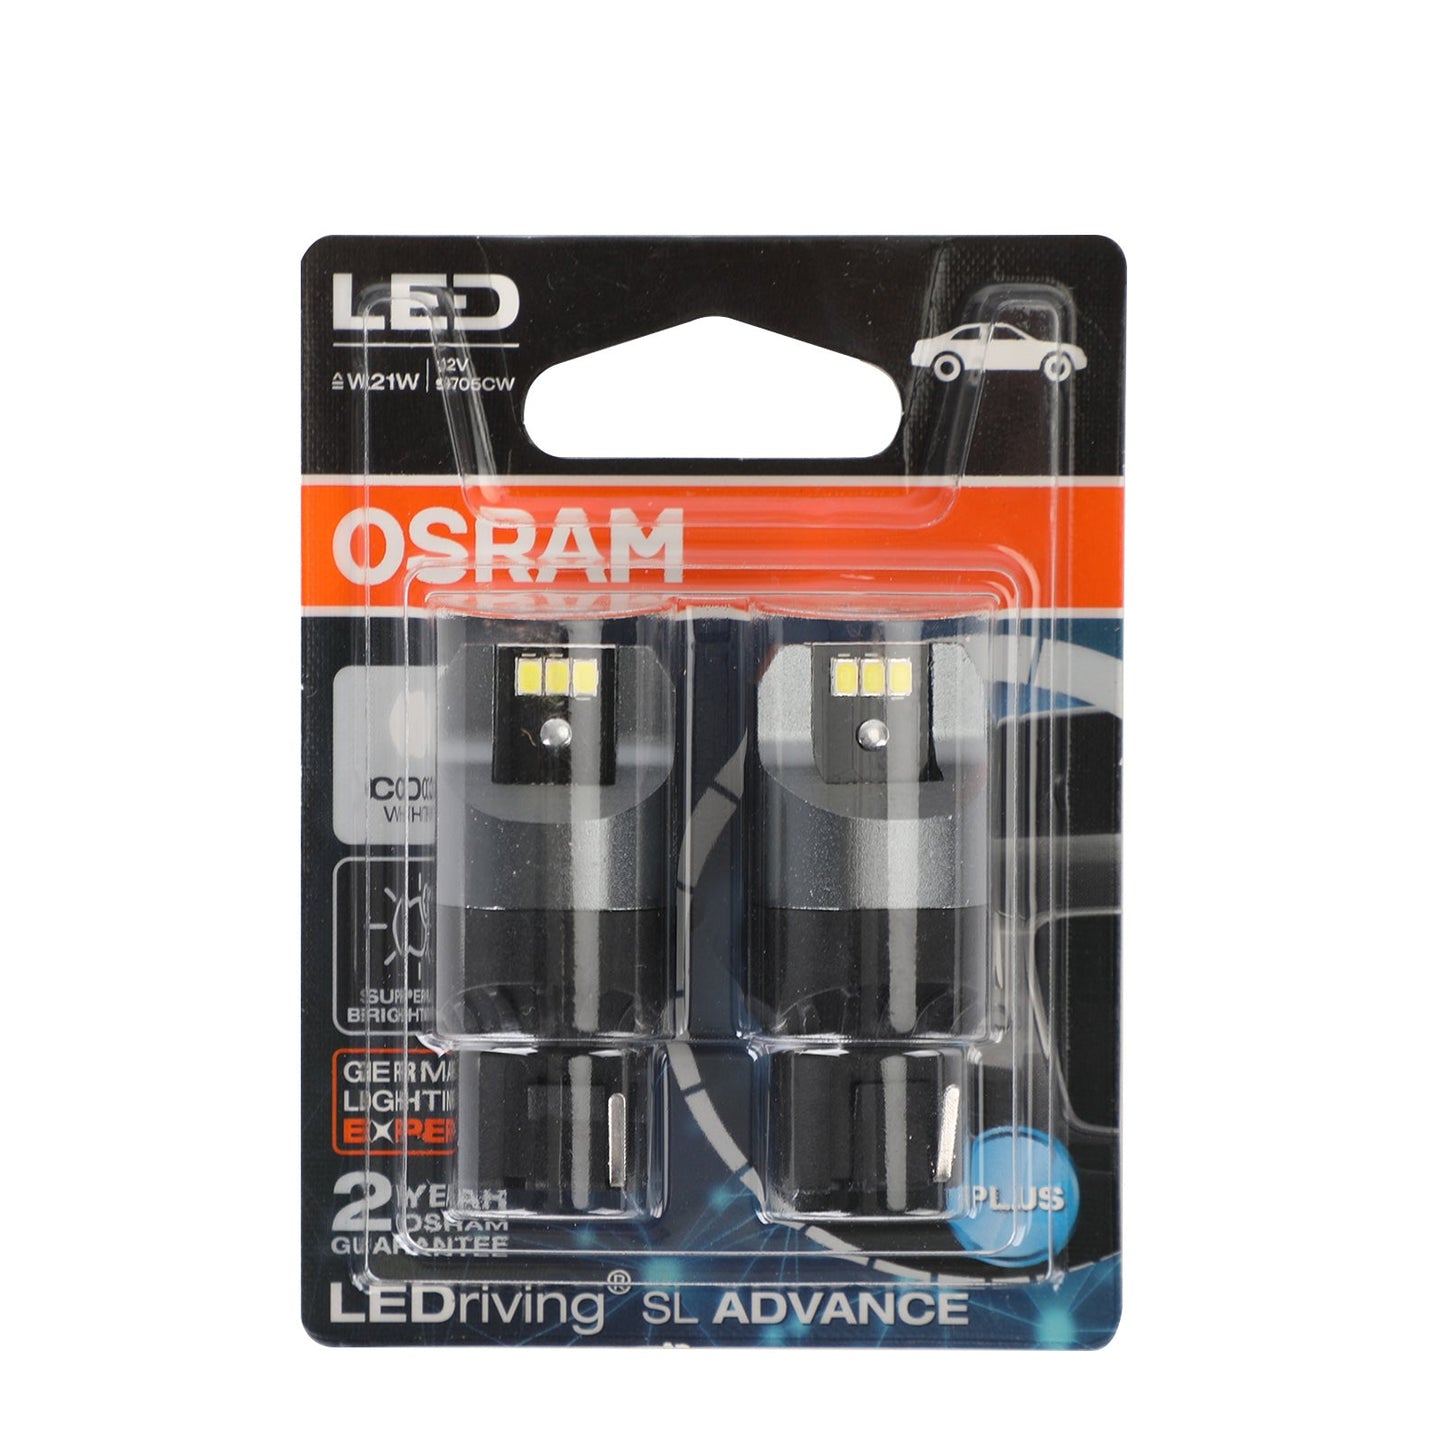 2x For OSRAM 9705CW Car Auxiliary Bulbs LED W21W 12V2.5W W3x16d